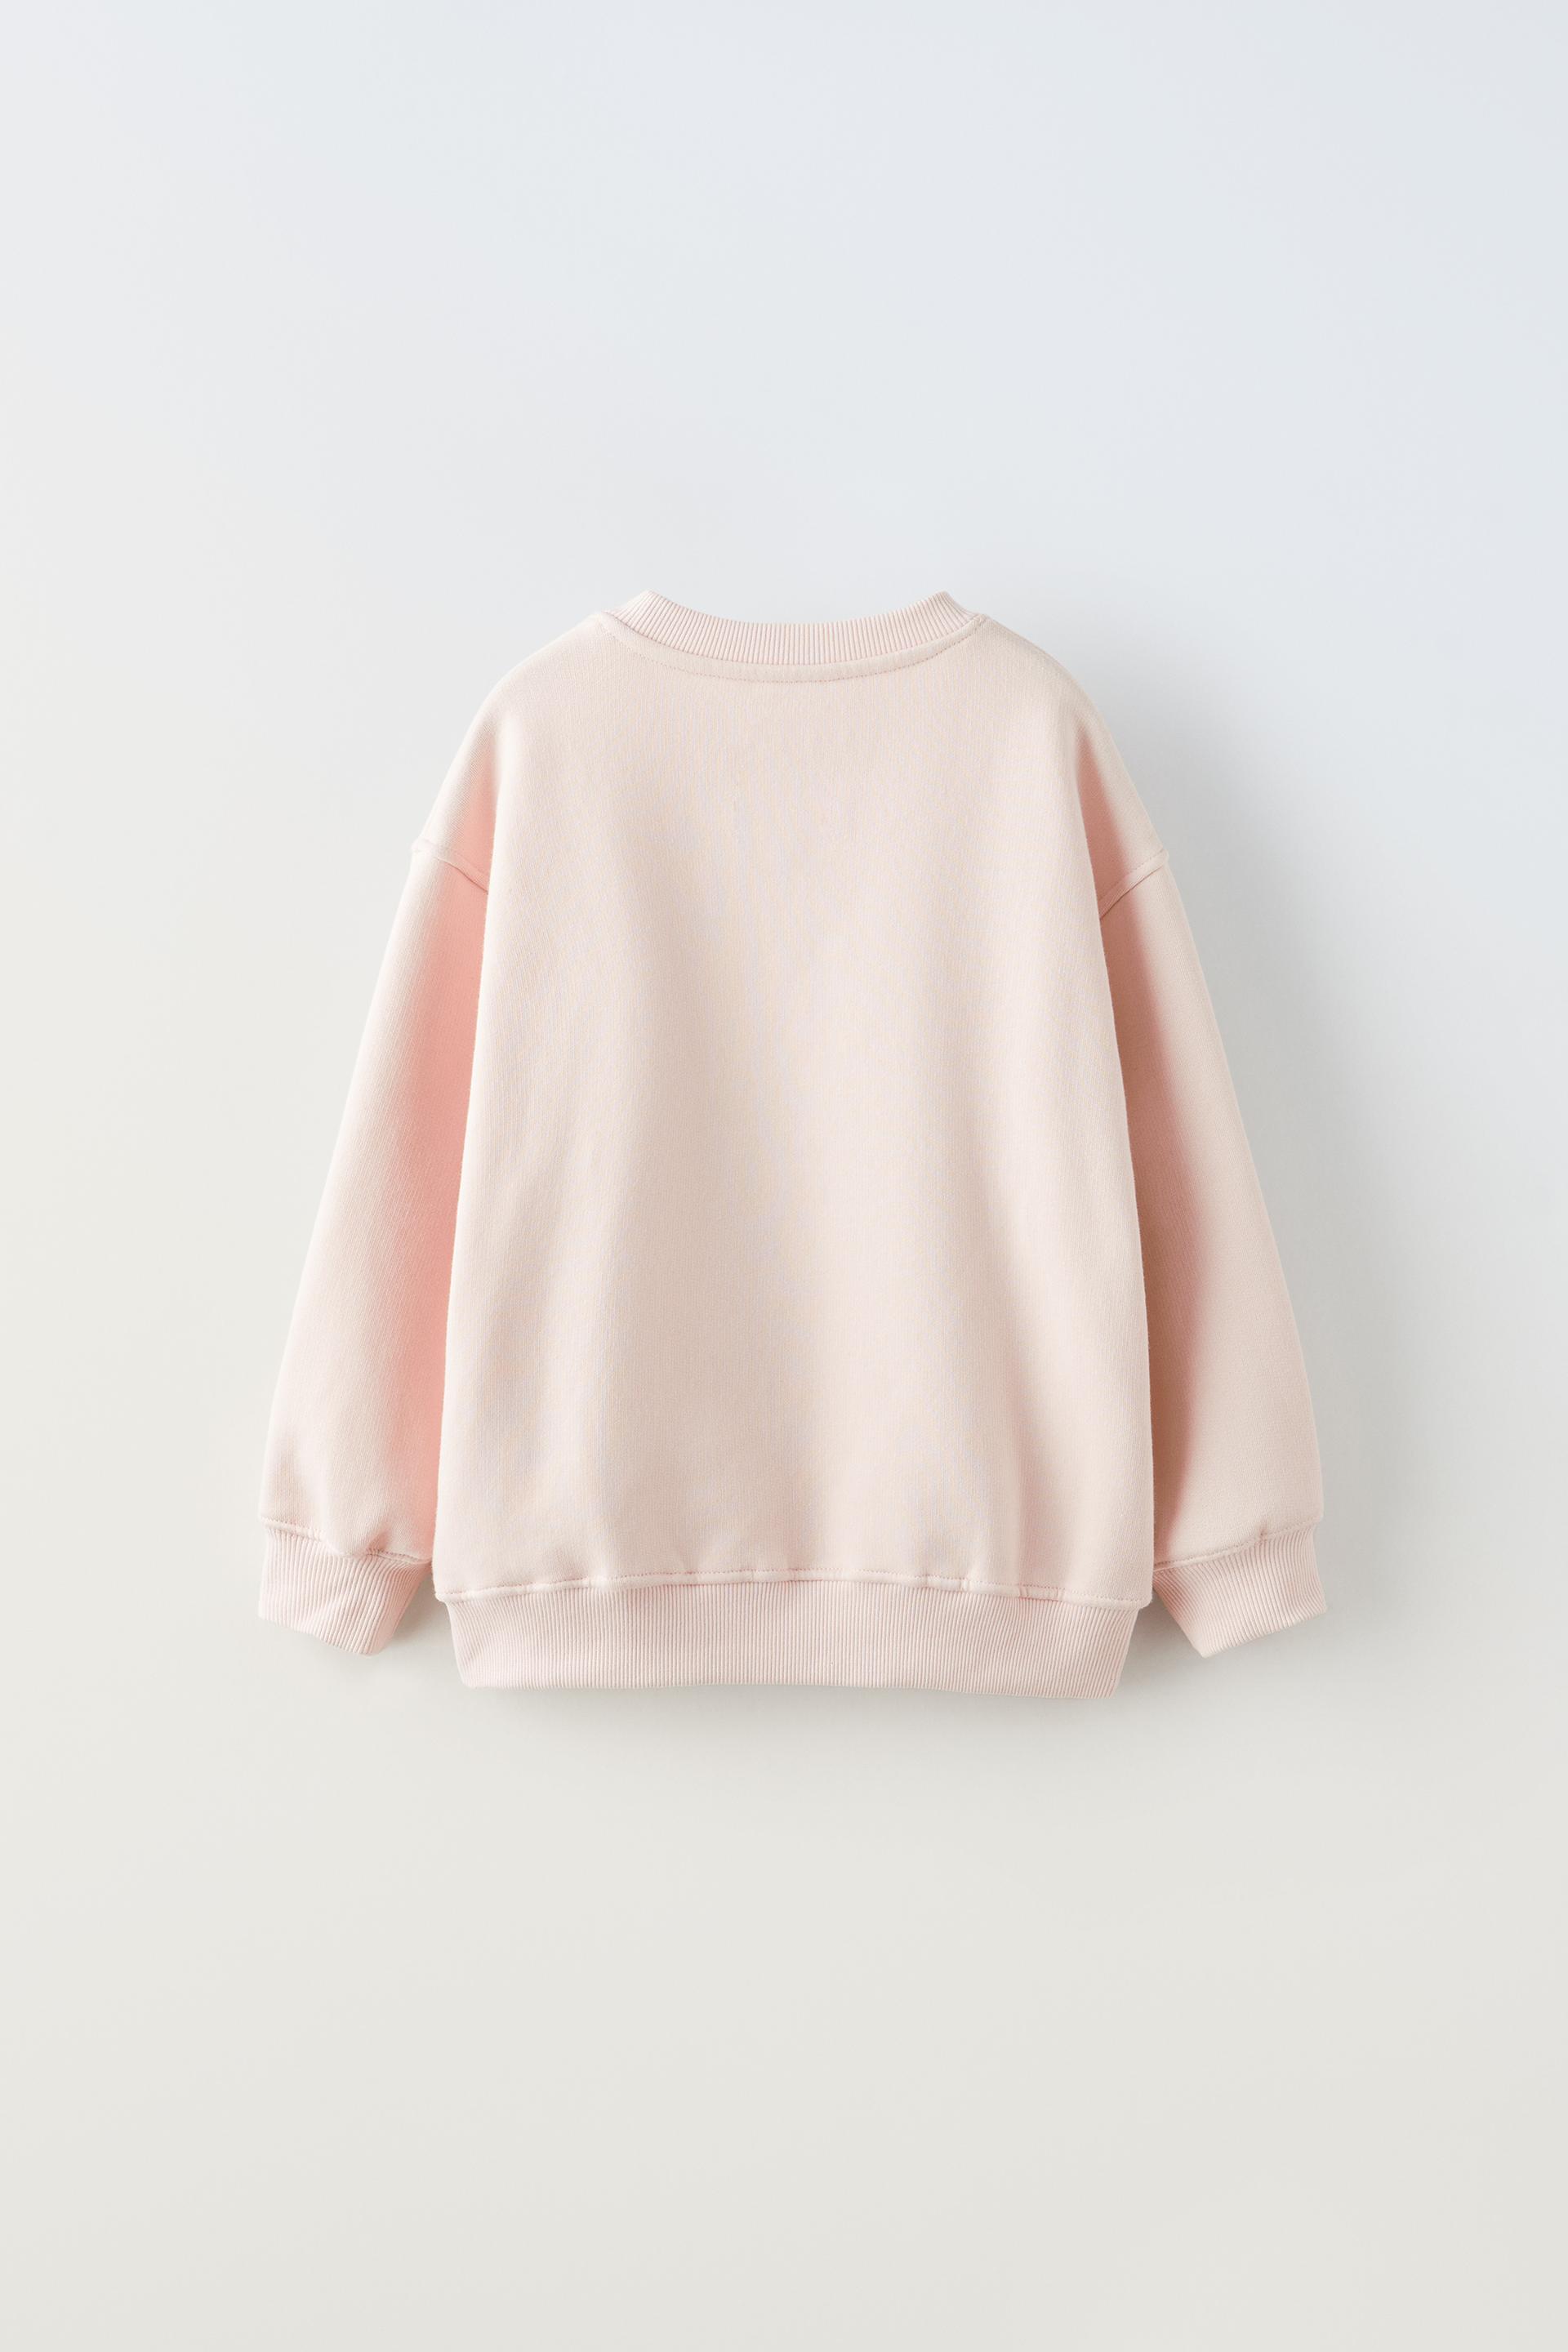 Zara Hot Pink Pullover Sweater